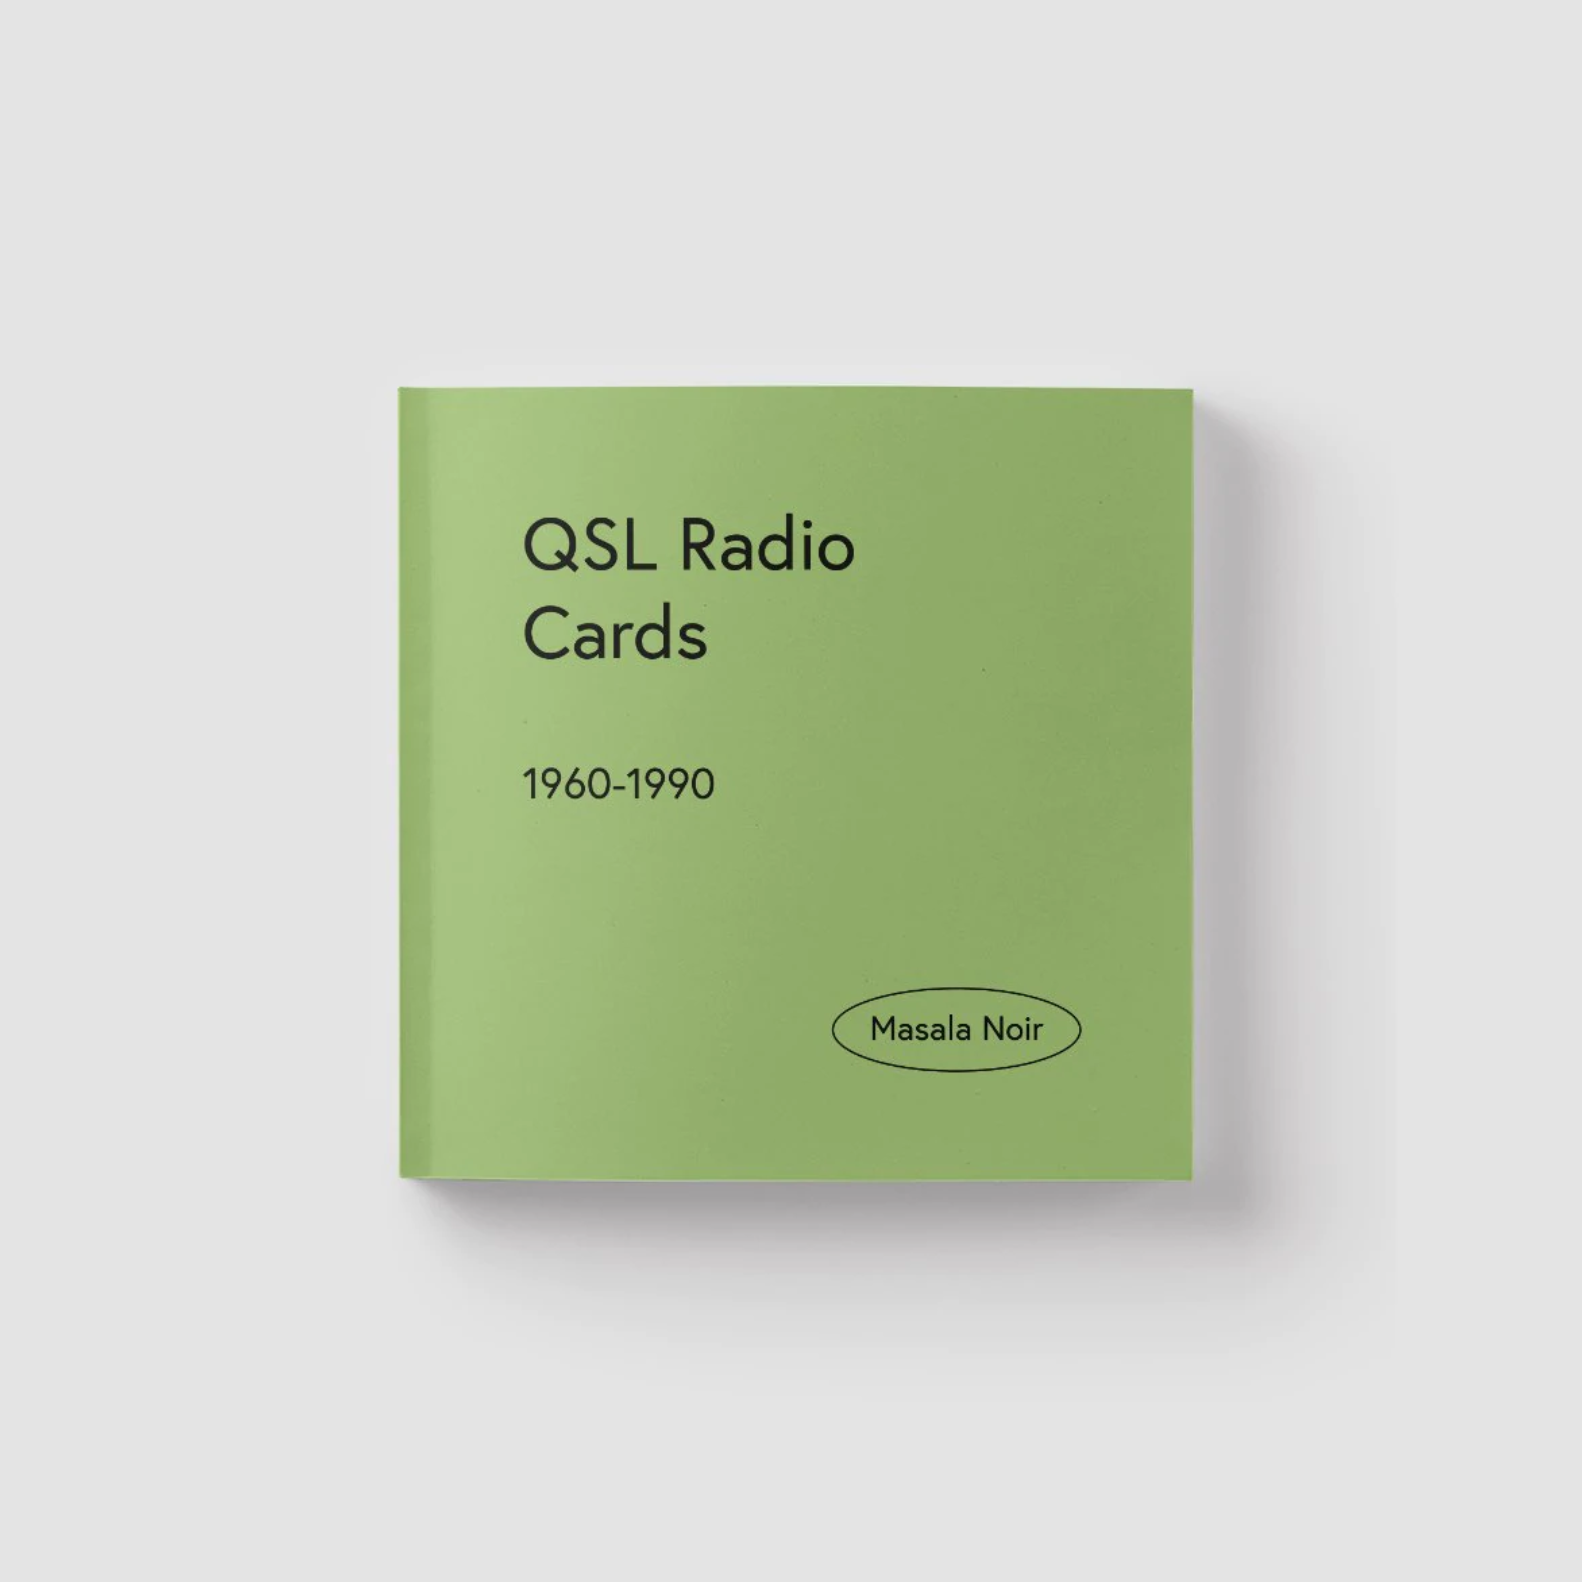 QSL RADIO CARDS